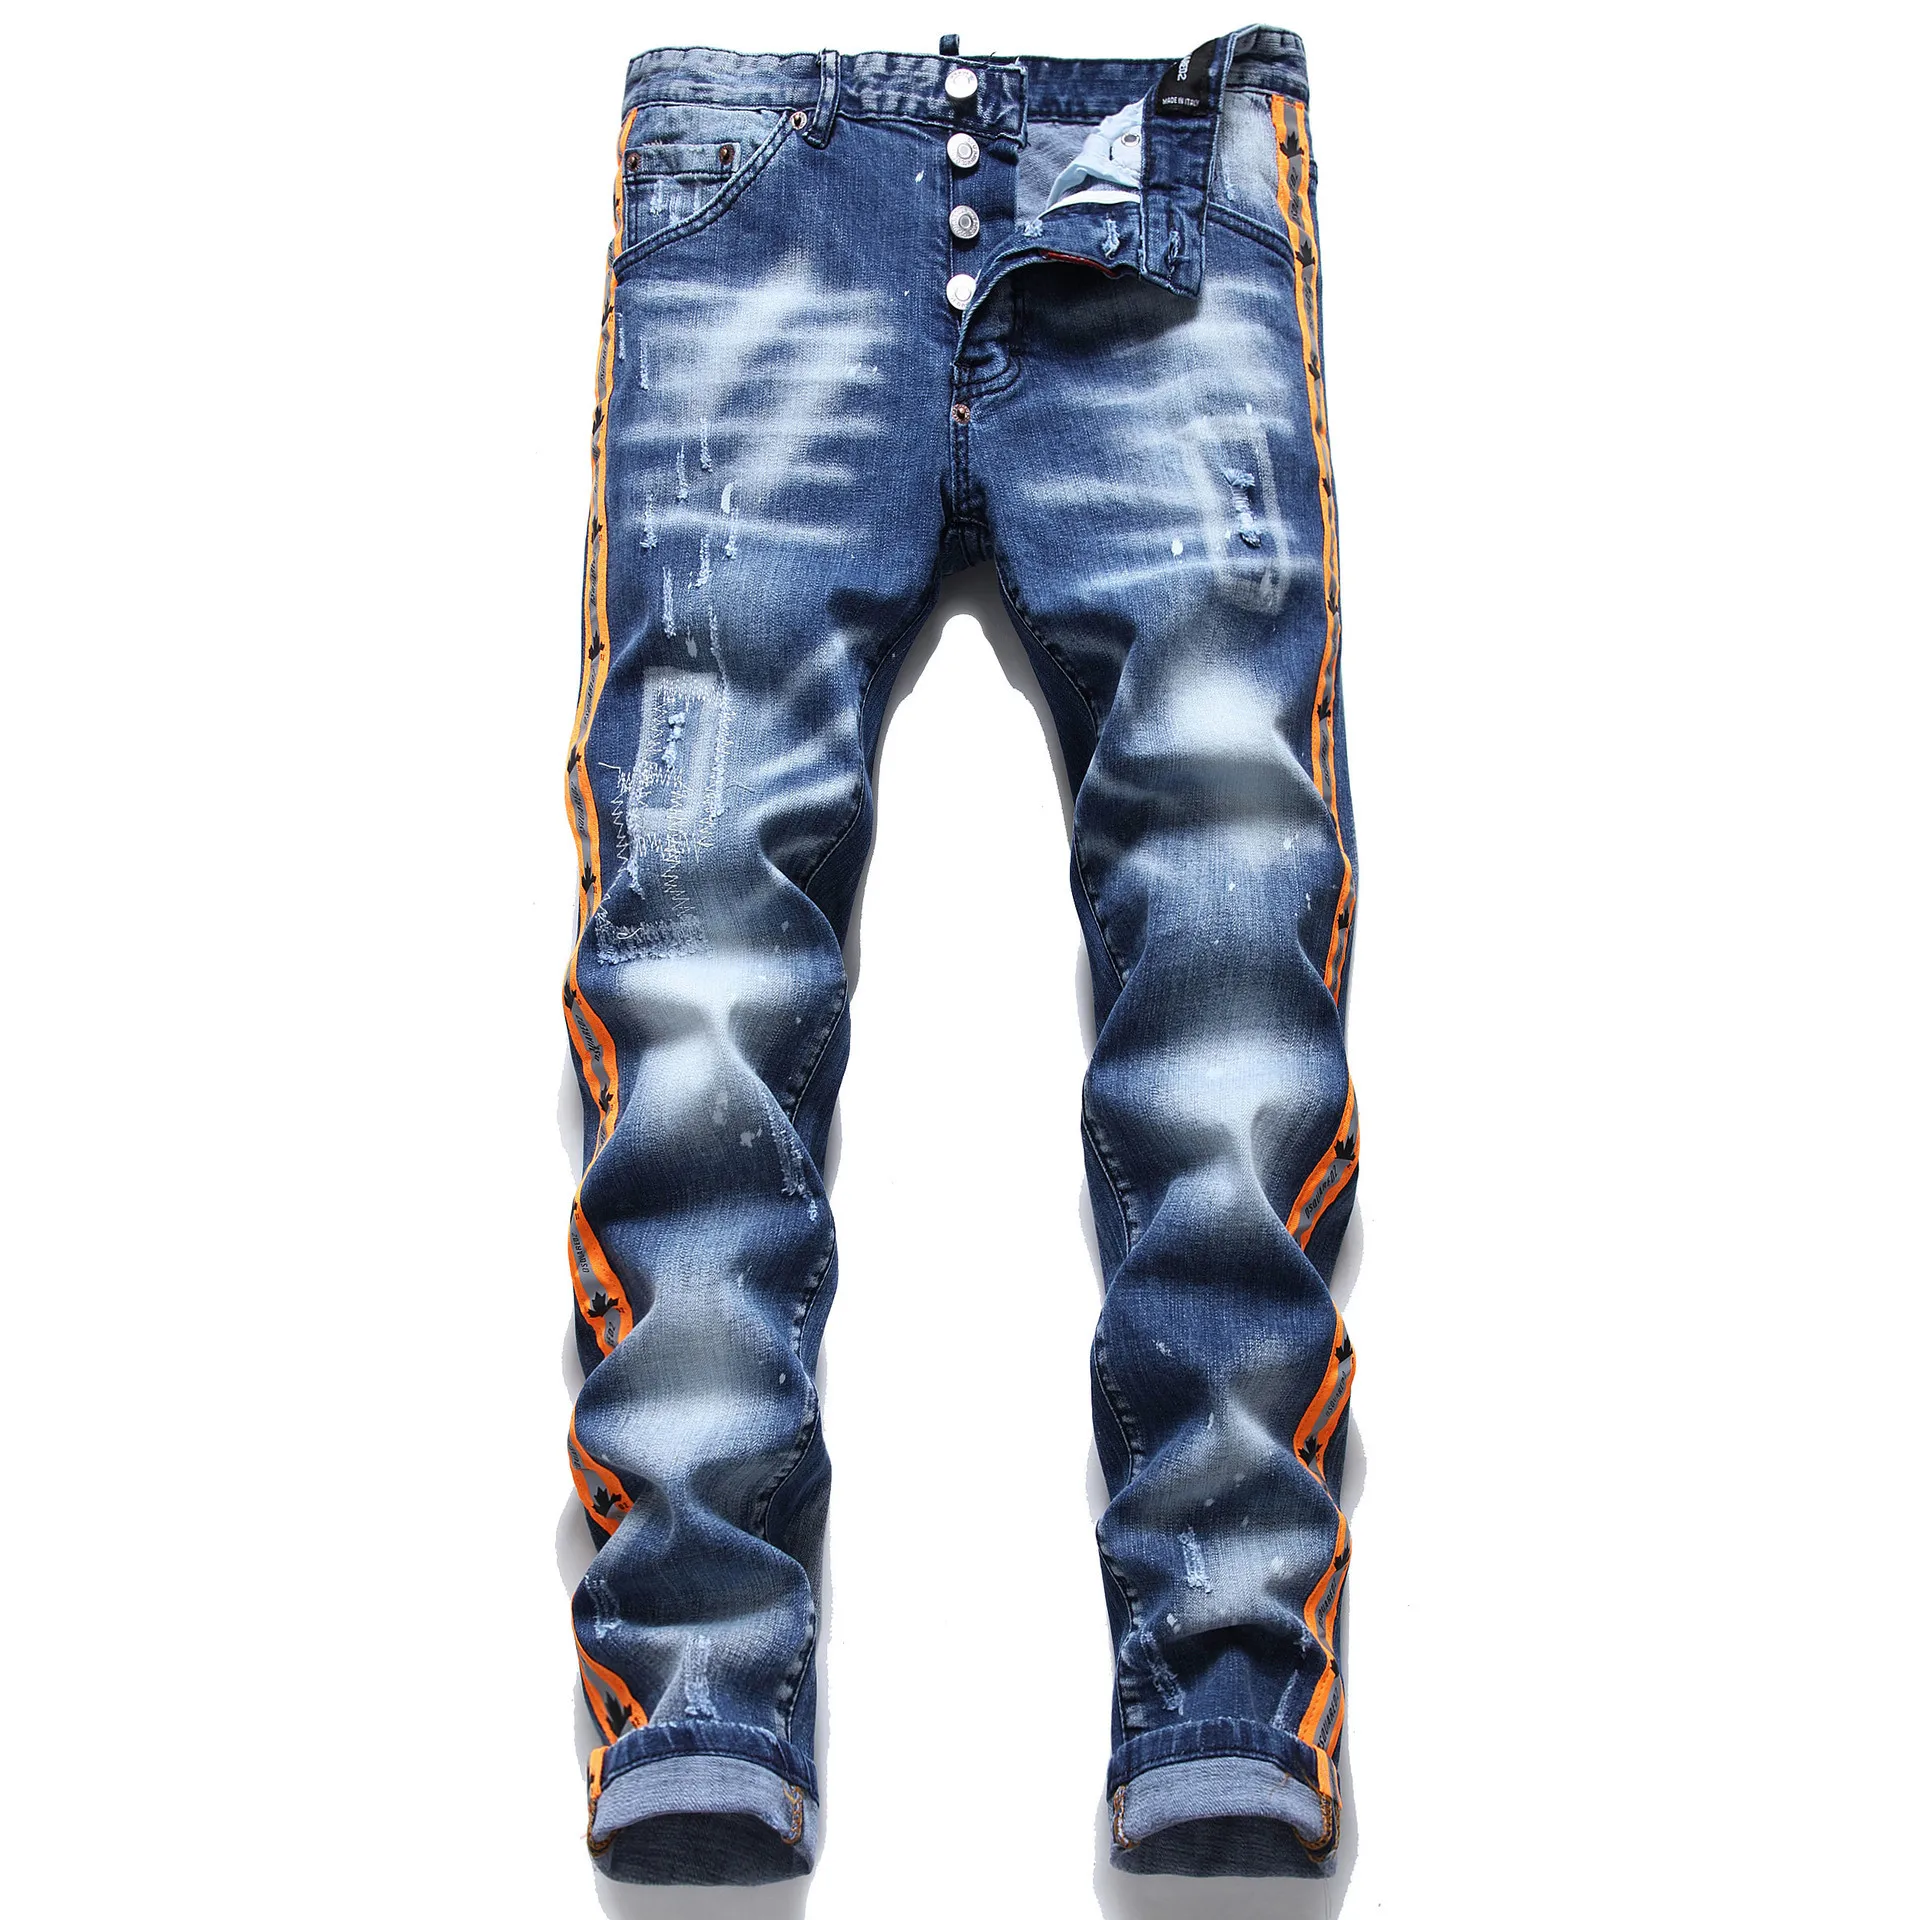 

Men's European Italy DSQ Brand Jeans Men's New Casual Slim Stretch Jeans High Street Fashion Orange Ribbon D2 Brand Jeans